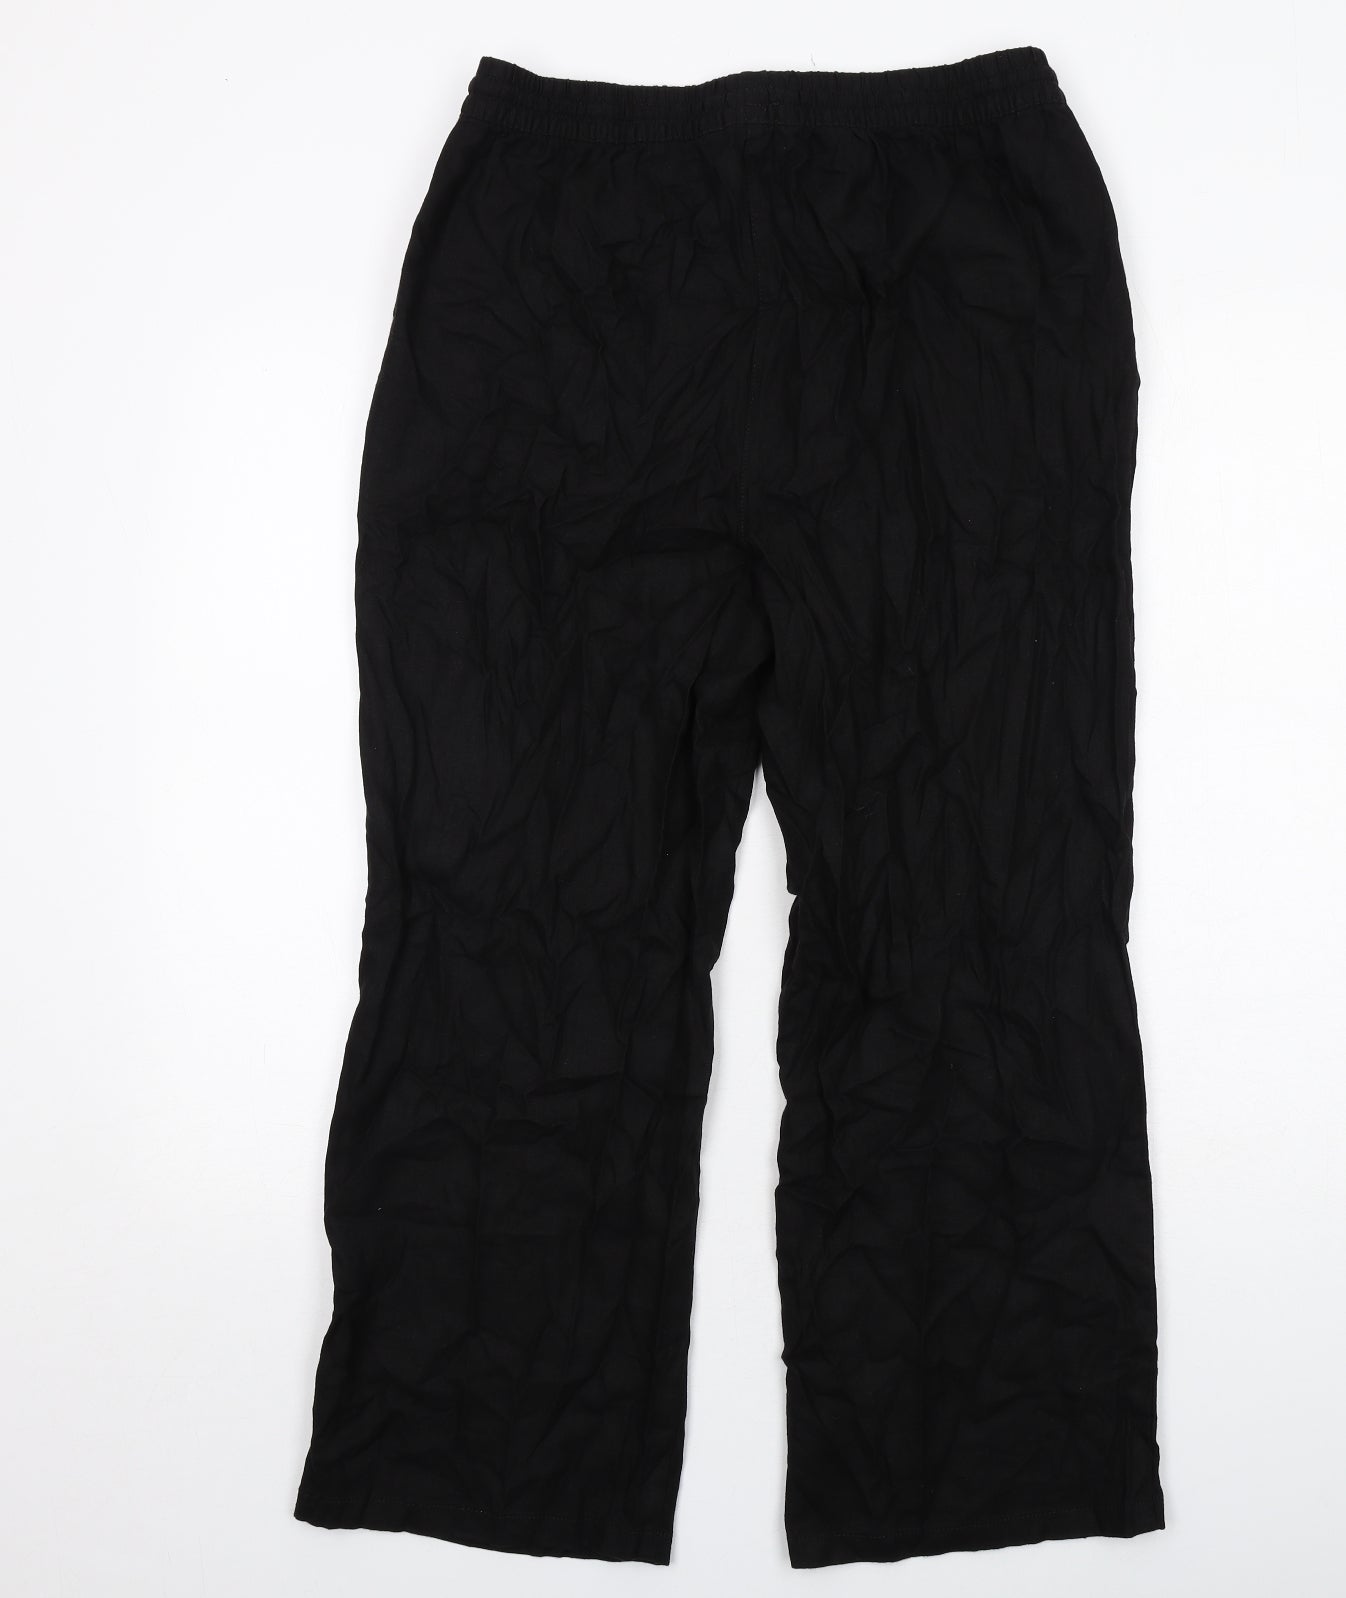 Bonmarché Womens Black Linen Trousers Size 14 Regular Drawstring